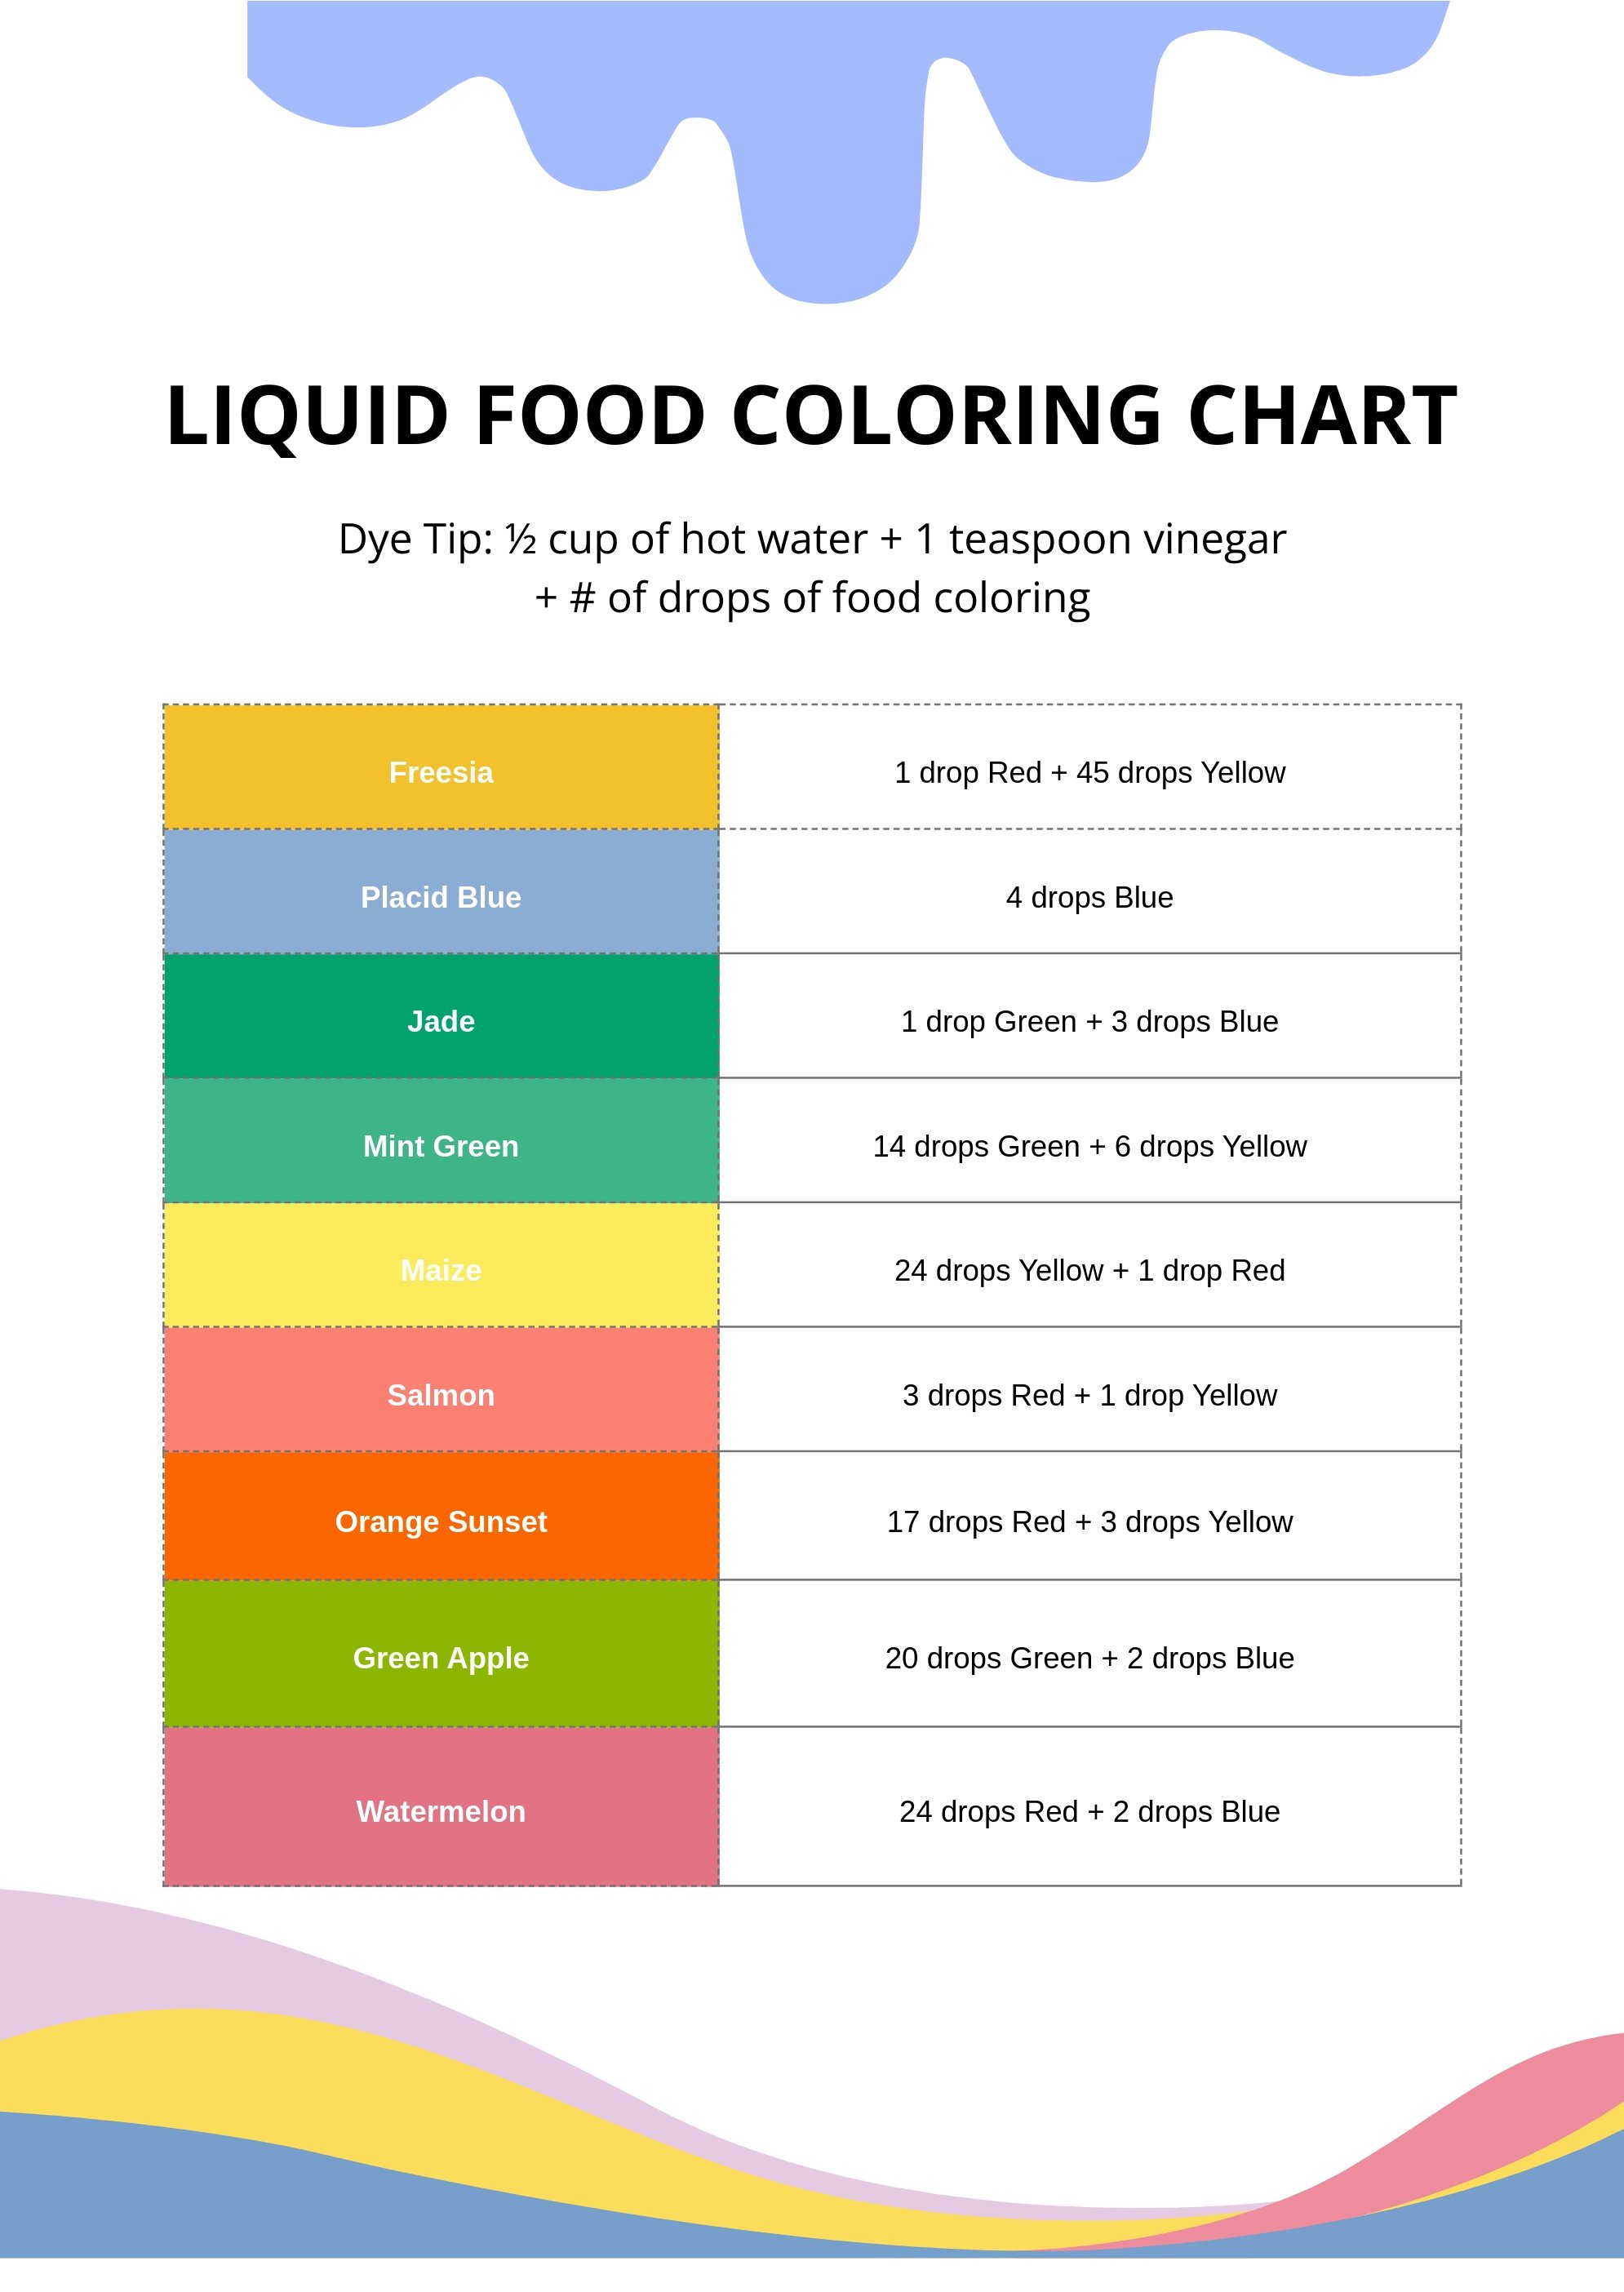 Liquid Food Coloring Chart in PDF, Illustrator